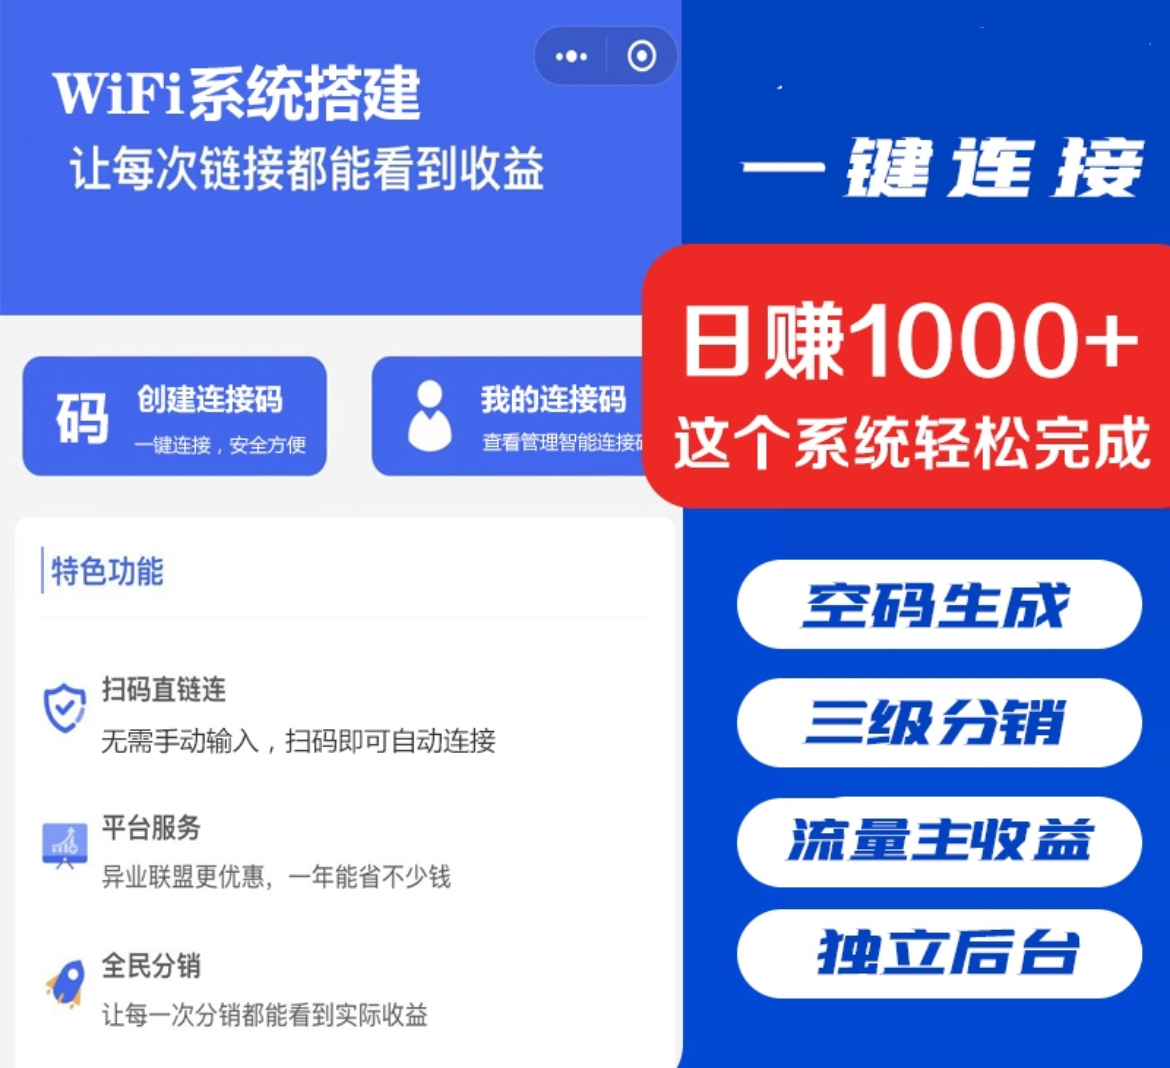 WiFi营销小程序共享WiFi门店一键免密码连接WiFi流量主分销小程序-博创网